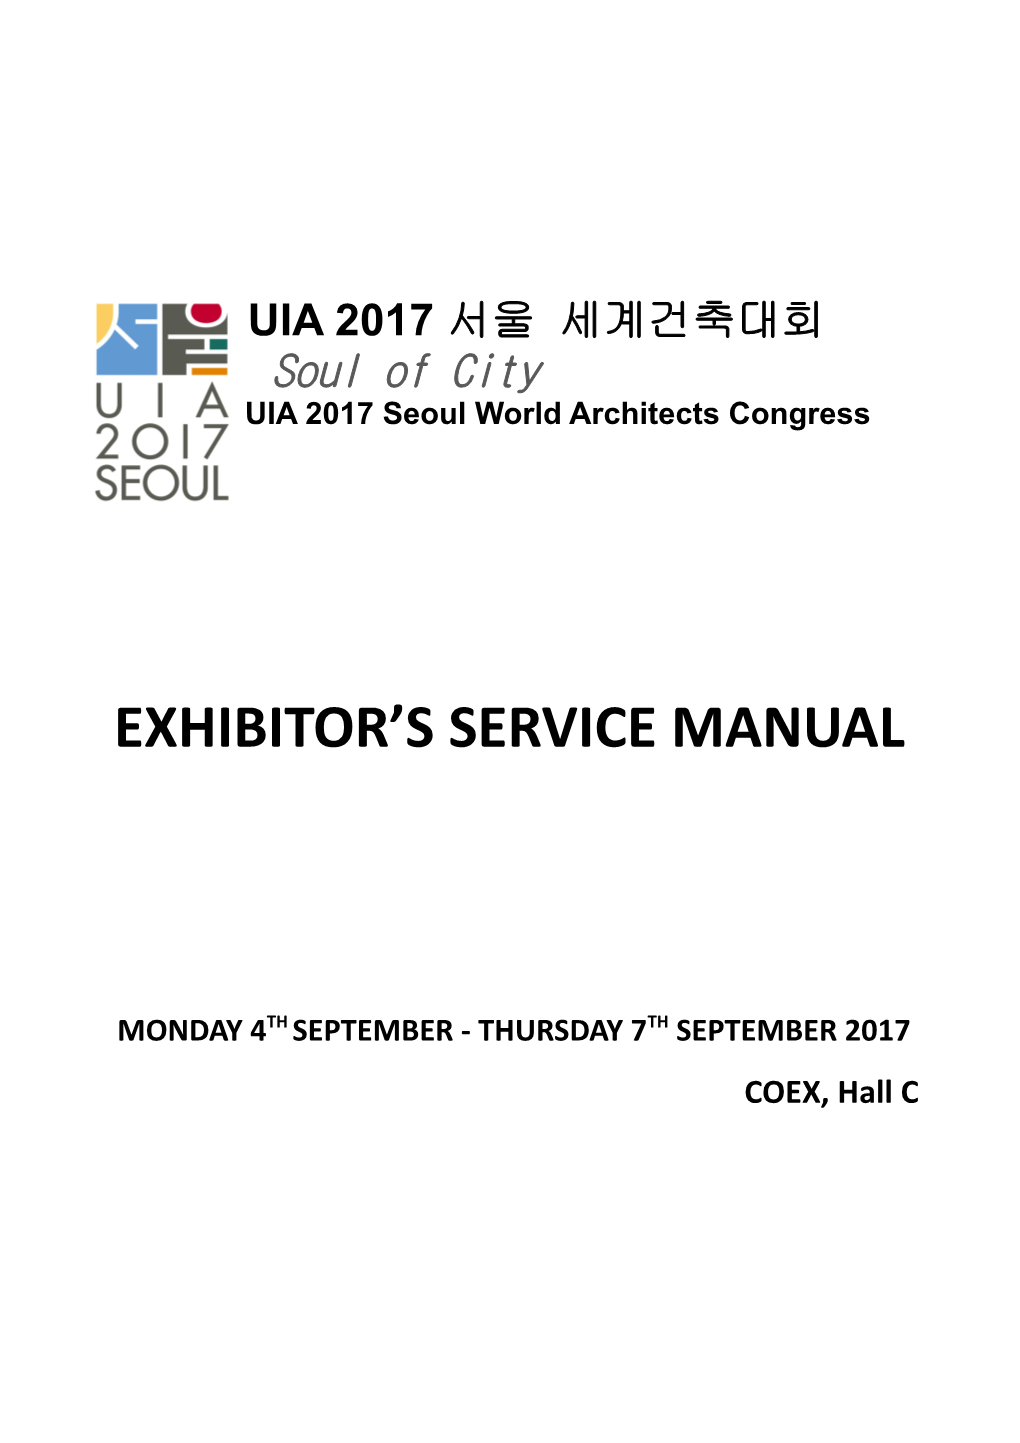 UIA 2017 Seoul World Architects Congress